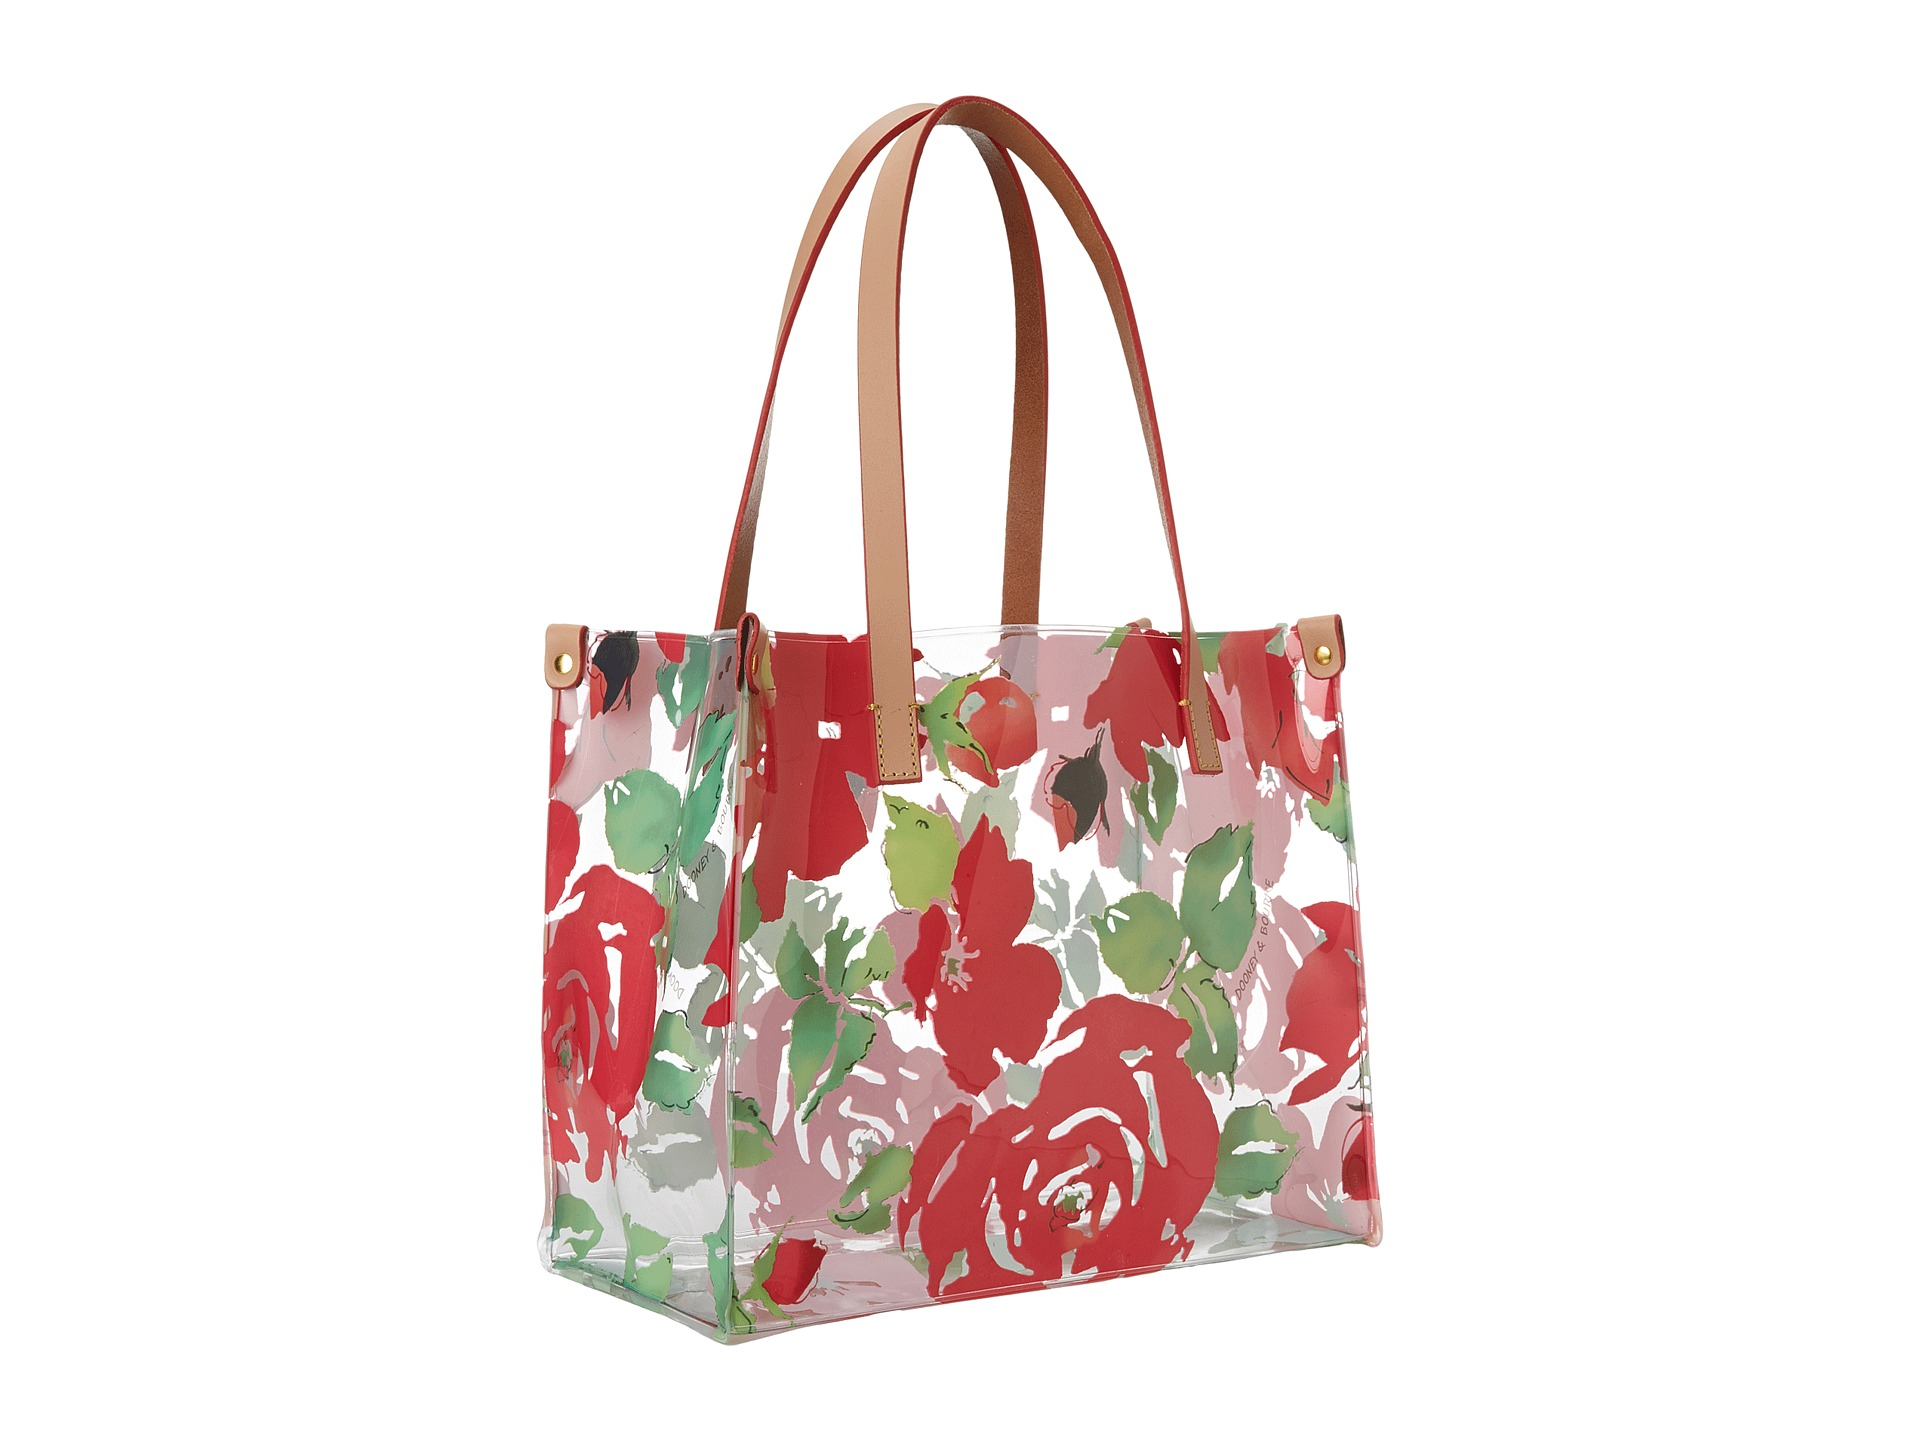 NWT Dooney Bourke Clear IT Medium Shopper Bag Purse Tote Handbag NEW 